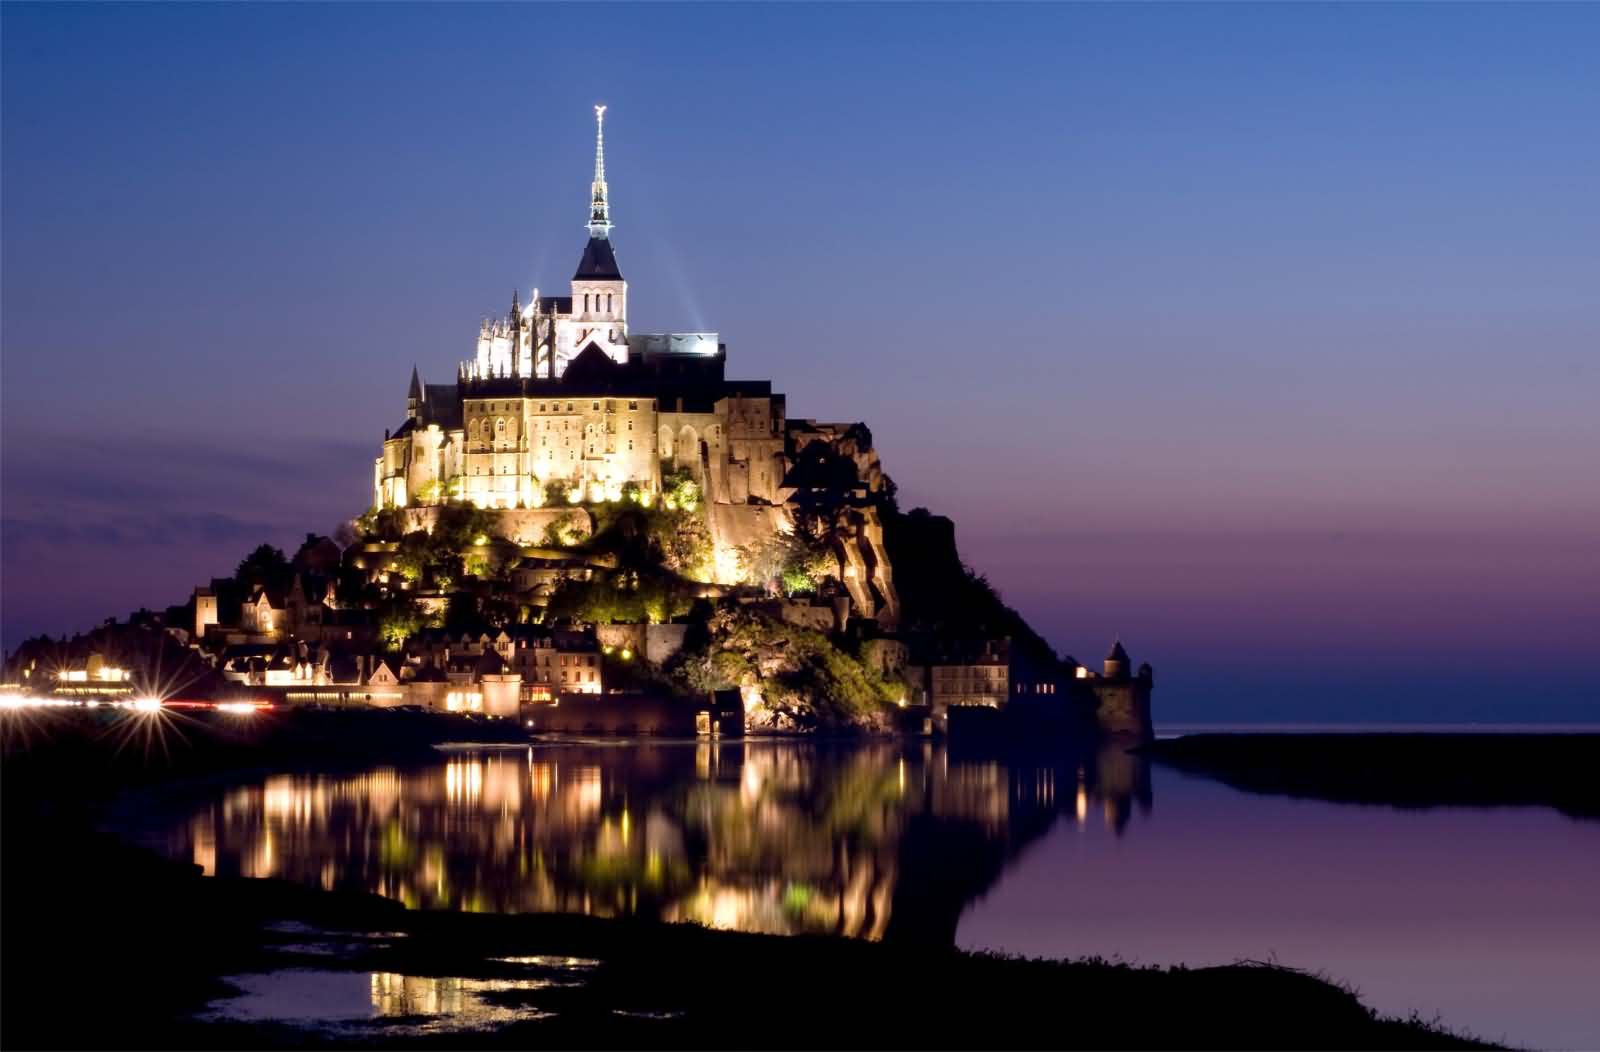 Mont Saint-Michel with evening lights